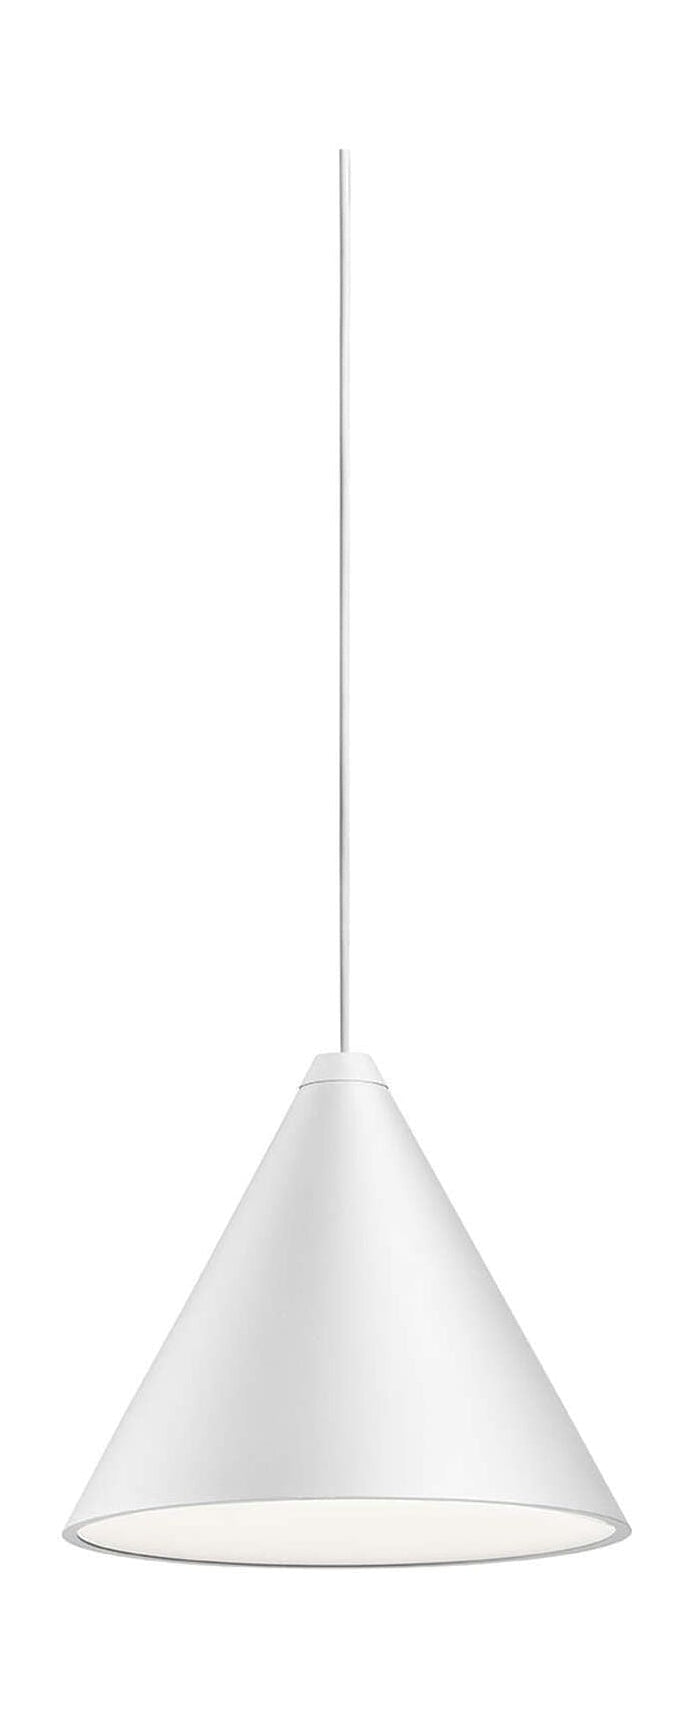 Flos String Light Cone Head Pendant Lamp 22 M, White